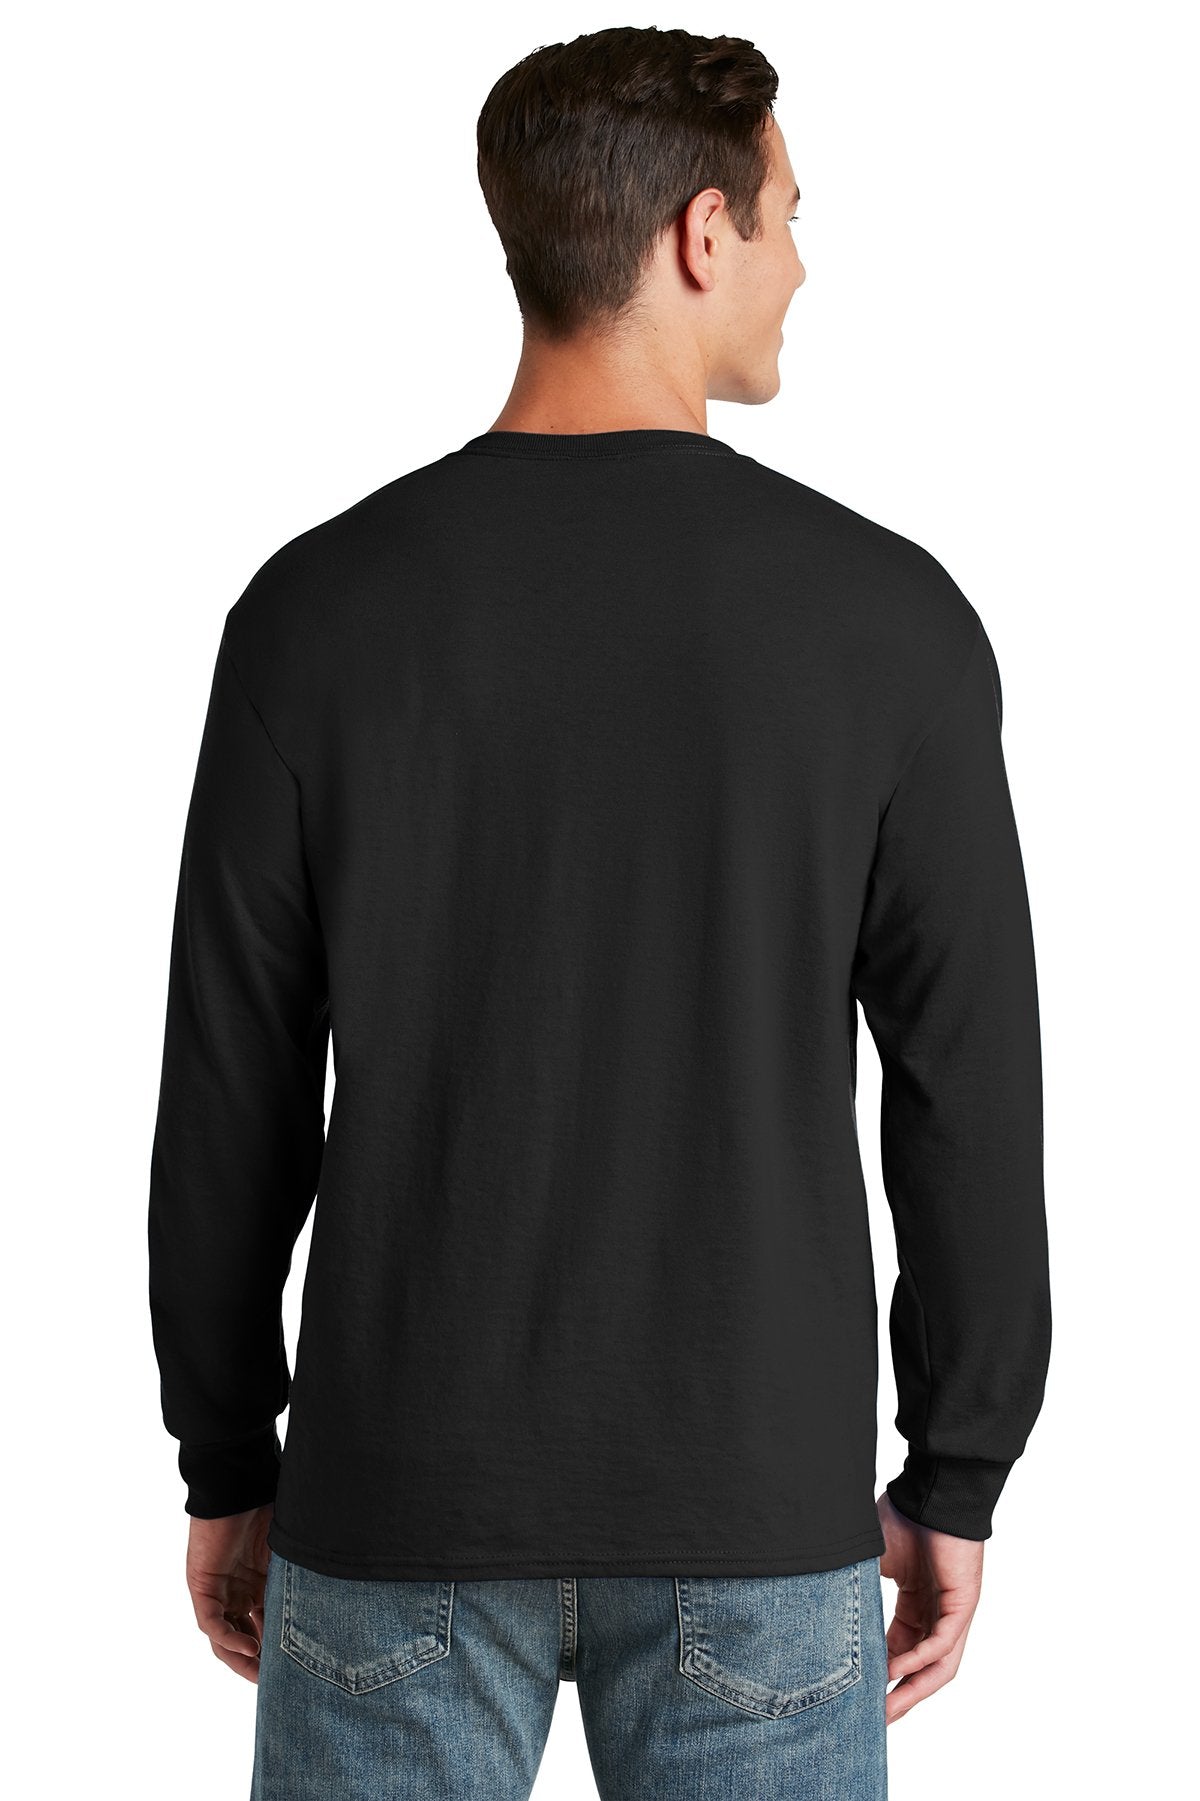 Jerzees Dri-Power 50/50 Cotton/Poly Long Sleeve T-Shirt 29LS Black